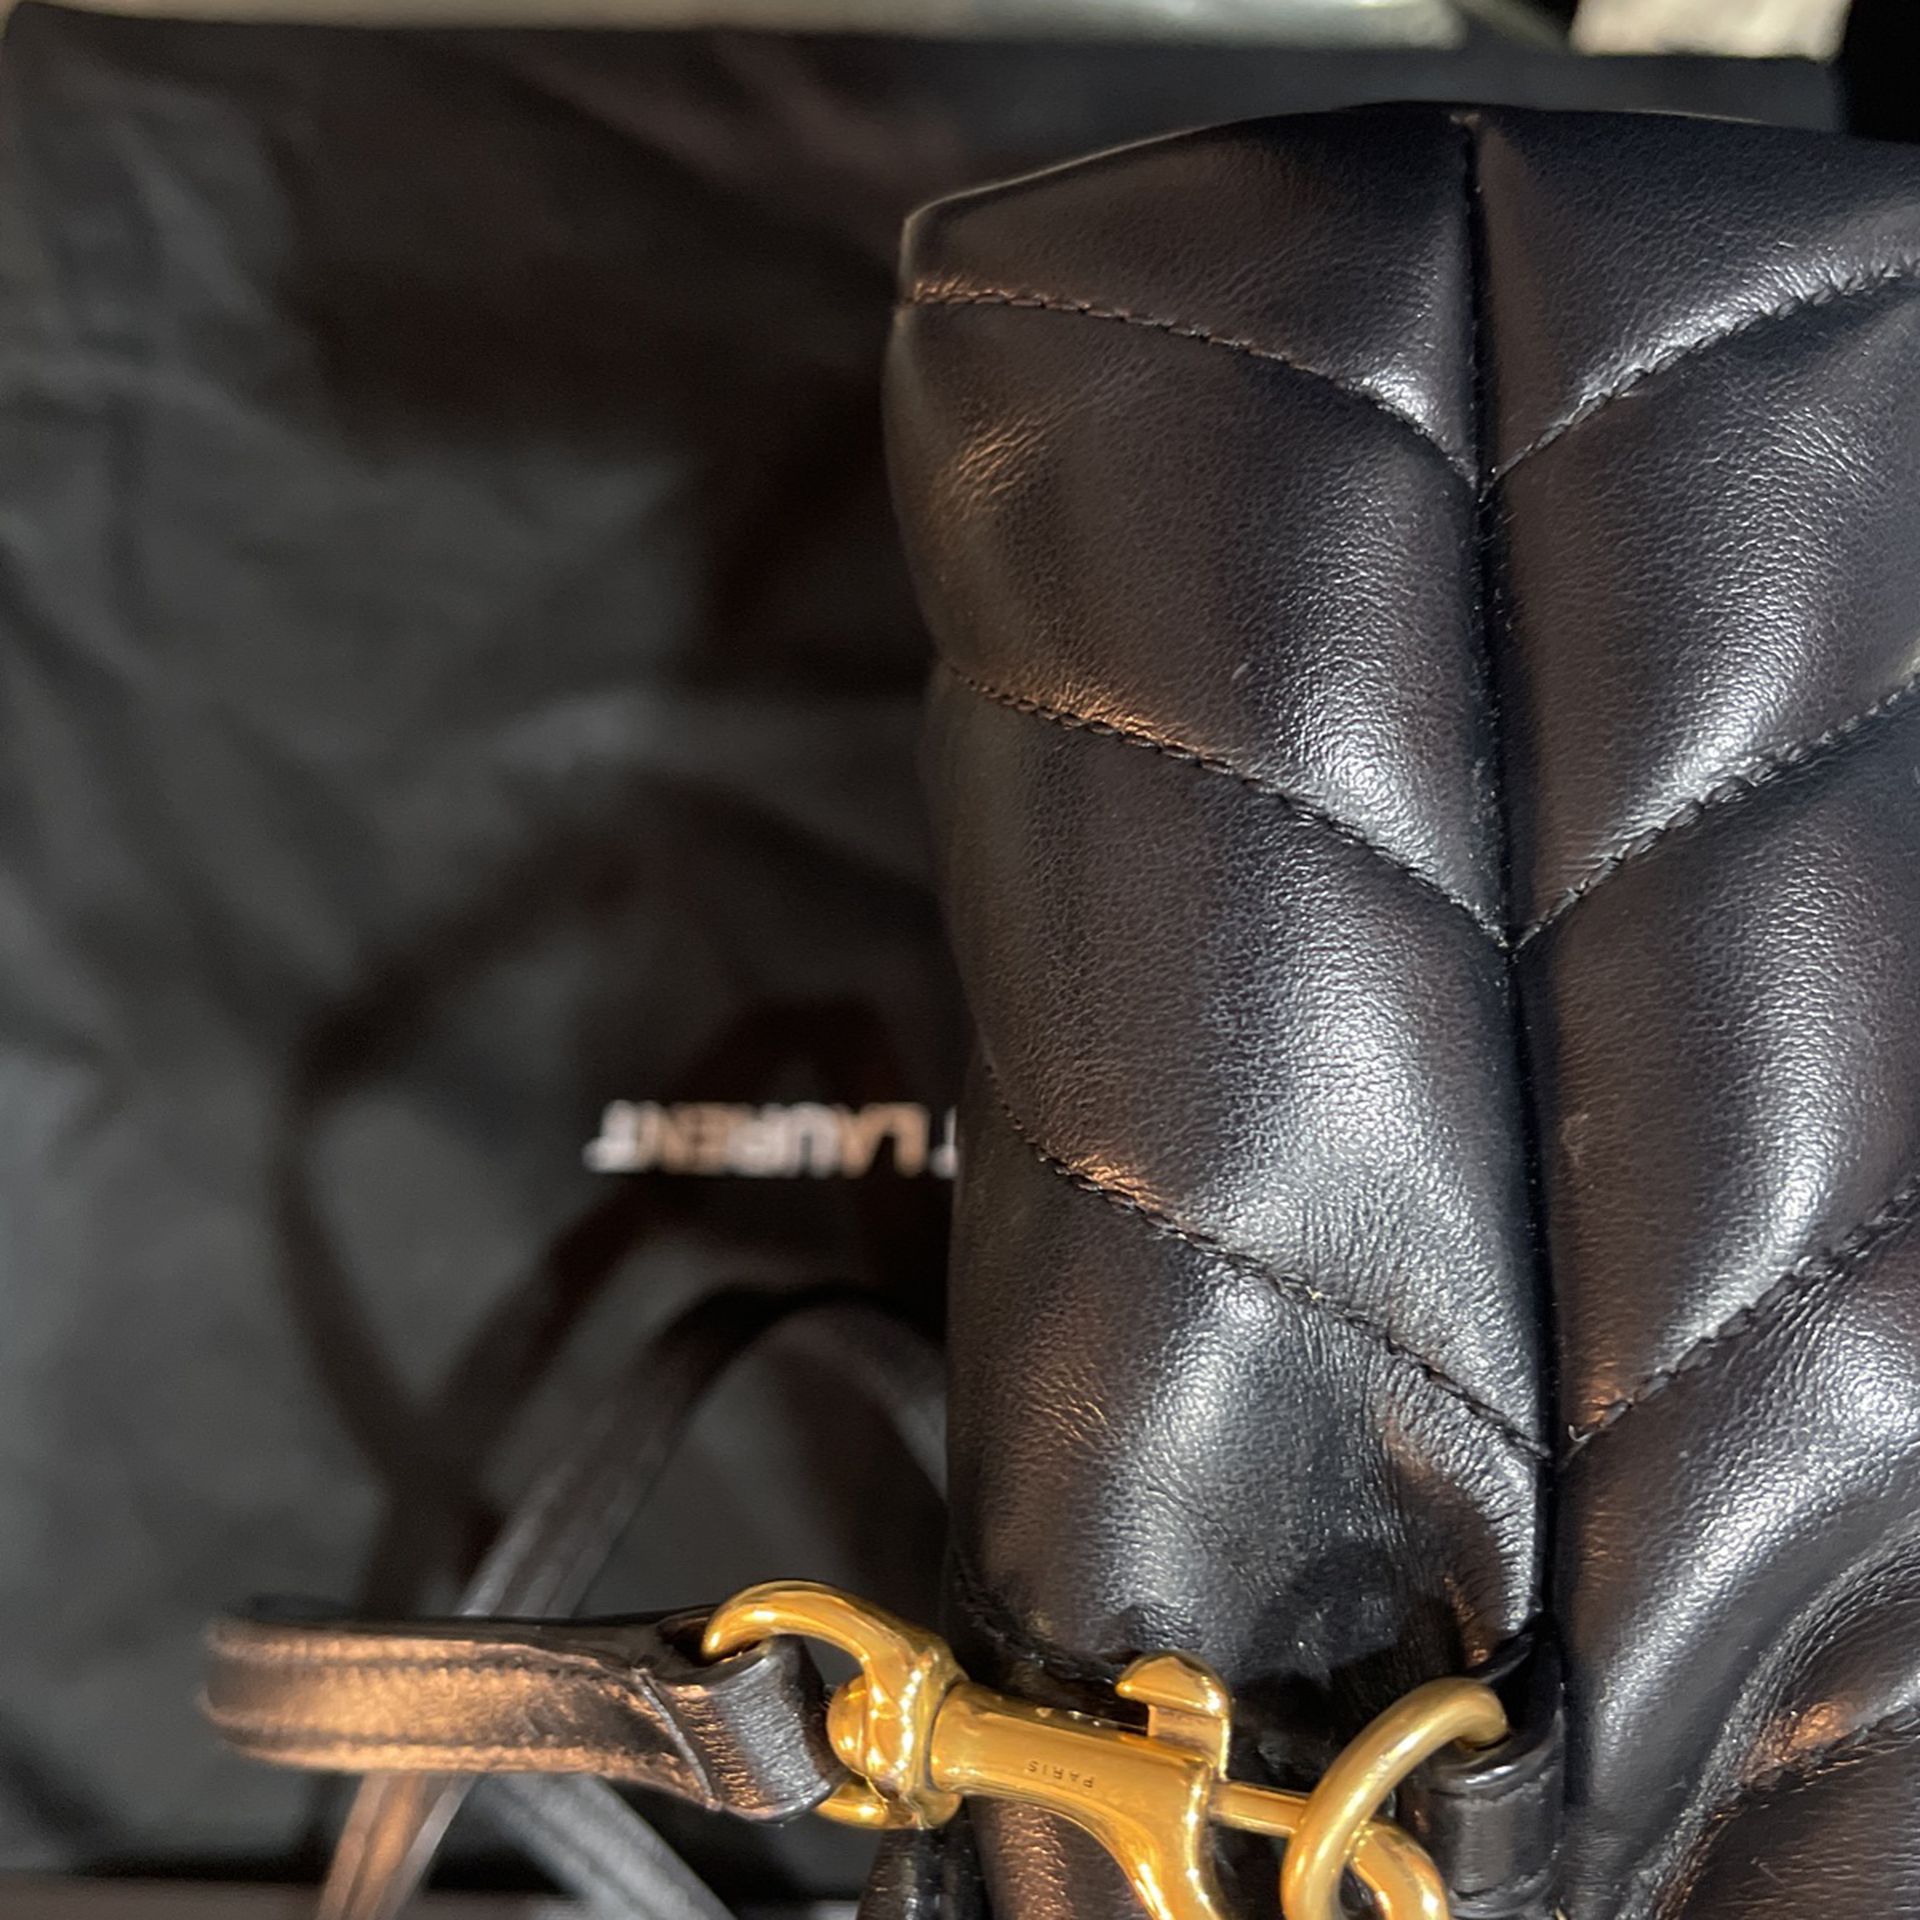 YSL Mini Bag Dark Beige for Sale in Fresno, CA - OfferUp